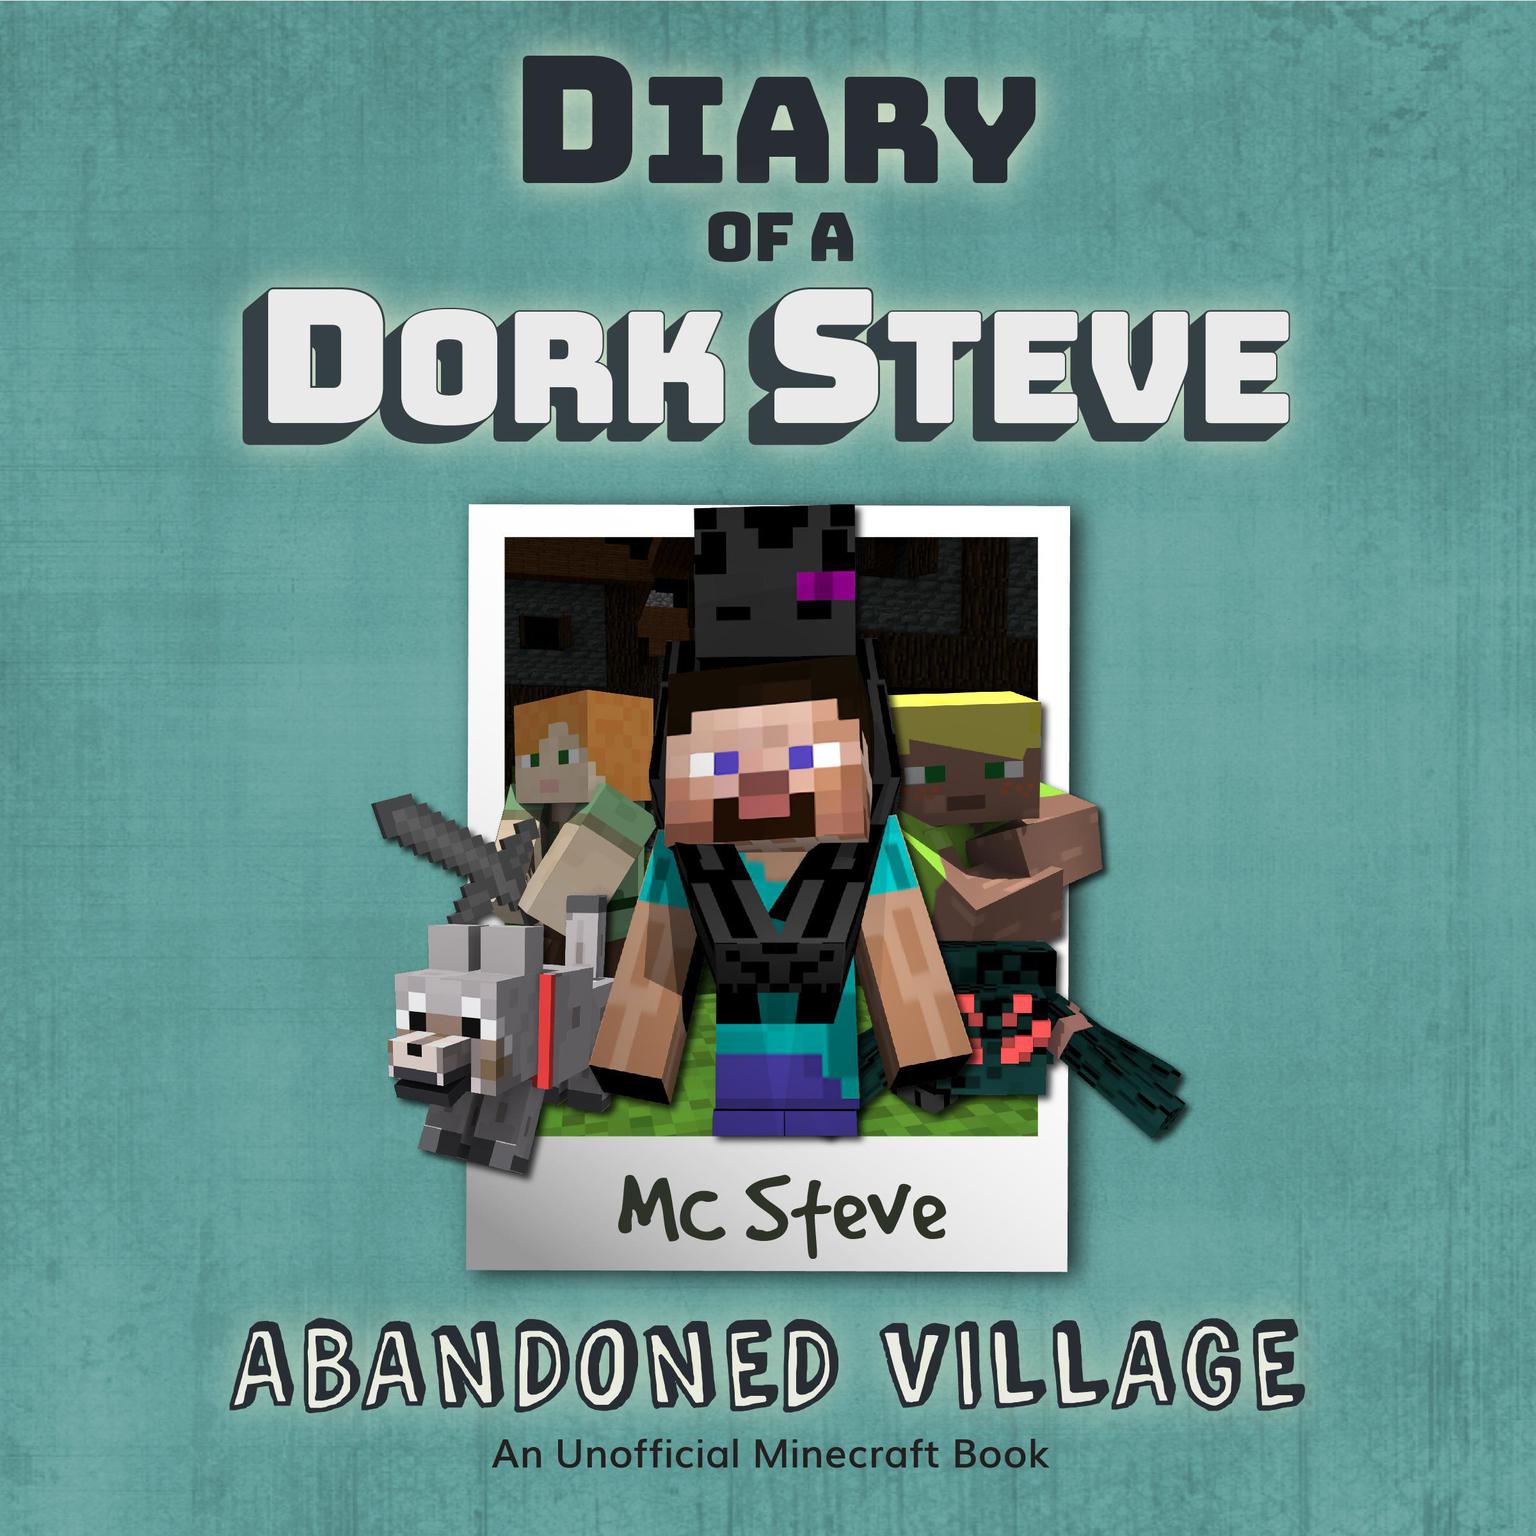 Diary of a Minecraft Dork Steve Book 3: Abandoned Village (An Unofficial Minecraft Diary Book): An Unofficial Minecraft Diary Book Audiobook, by MC Steve